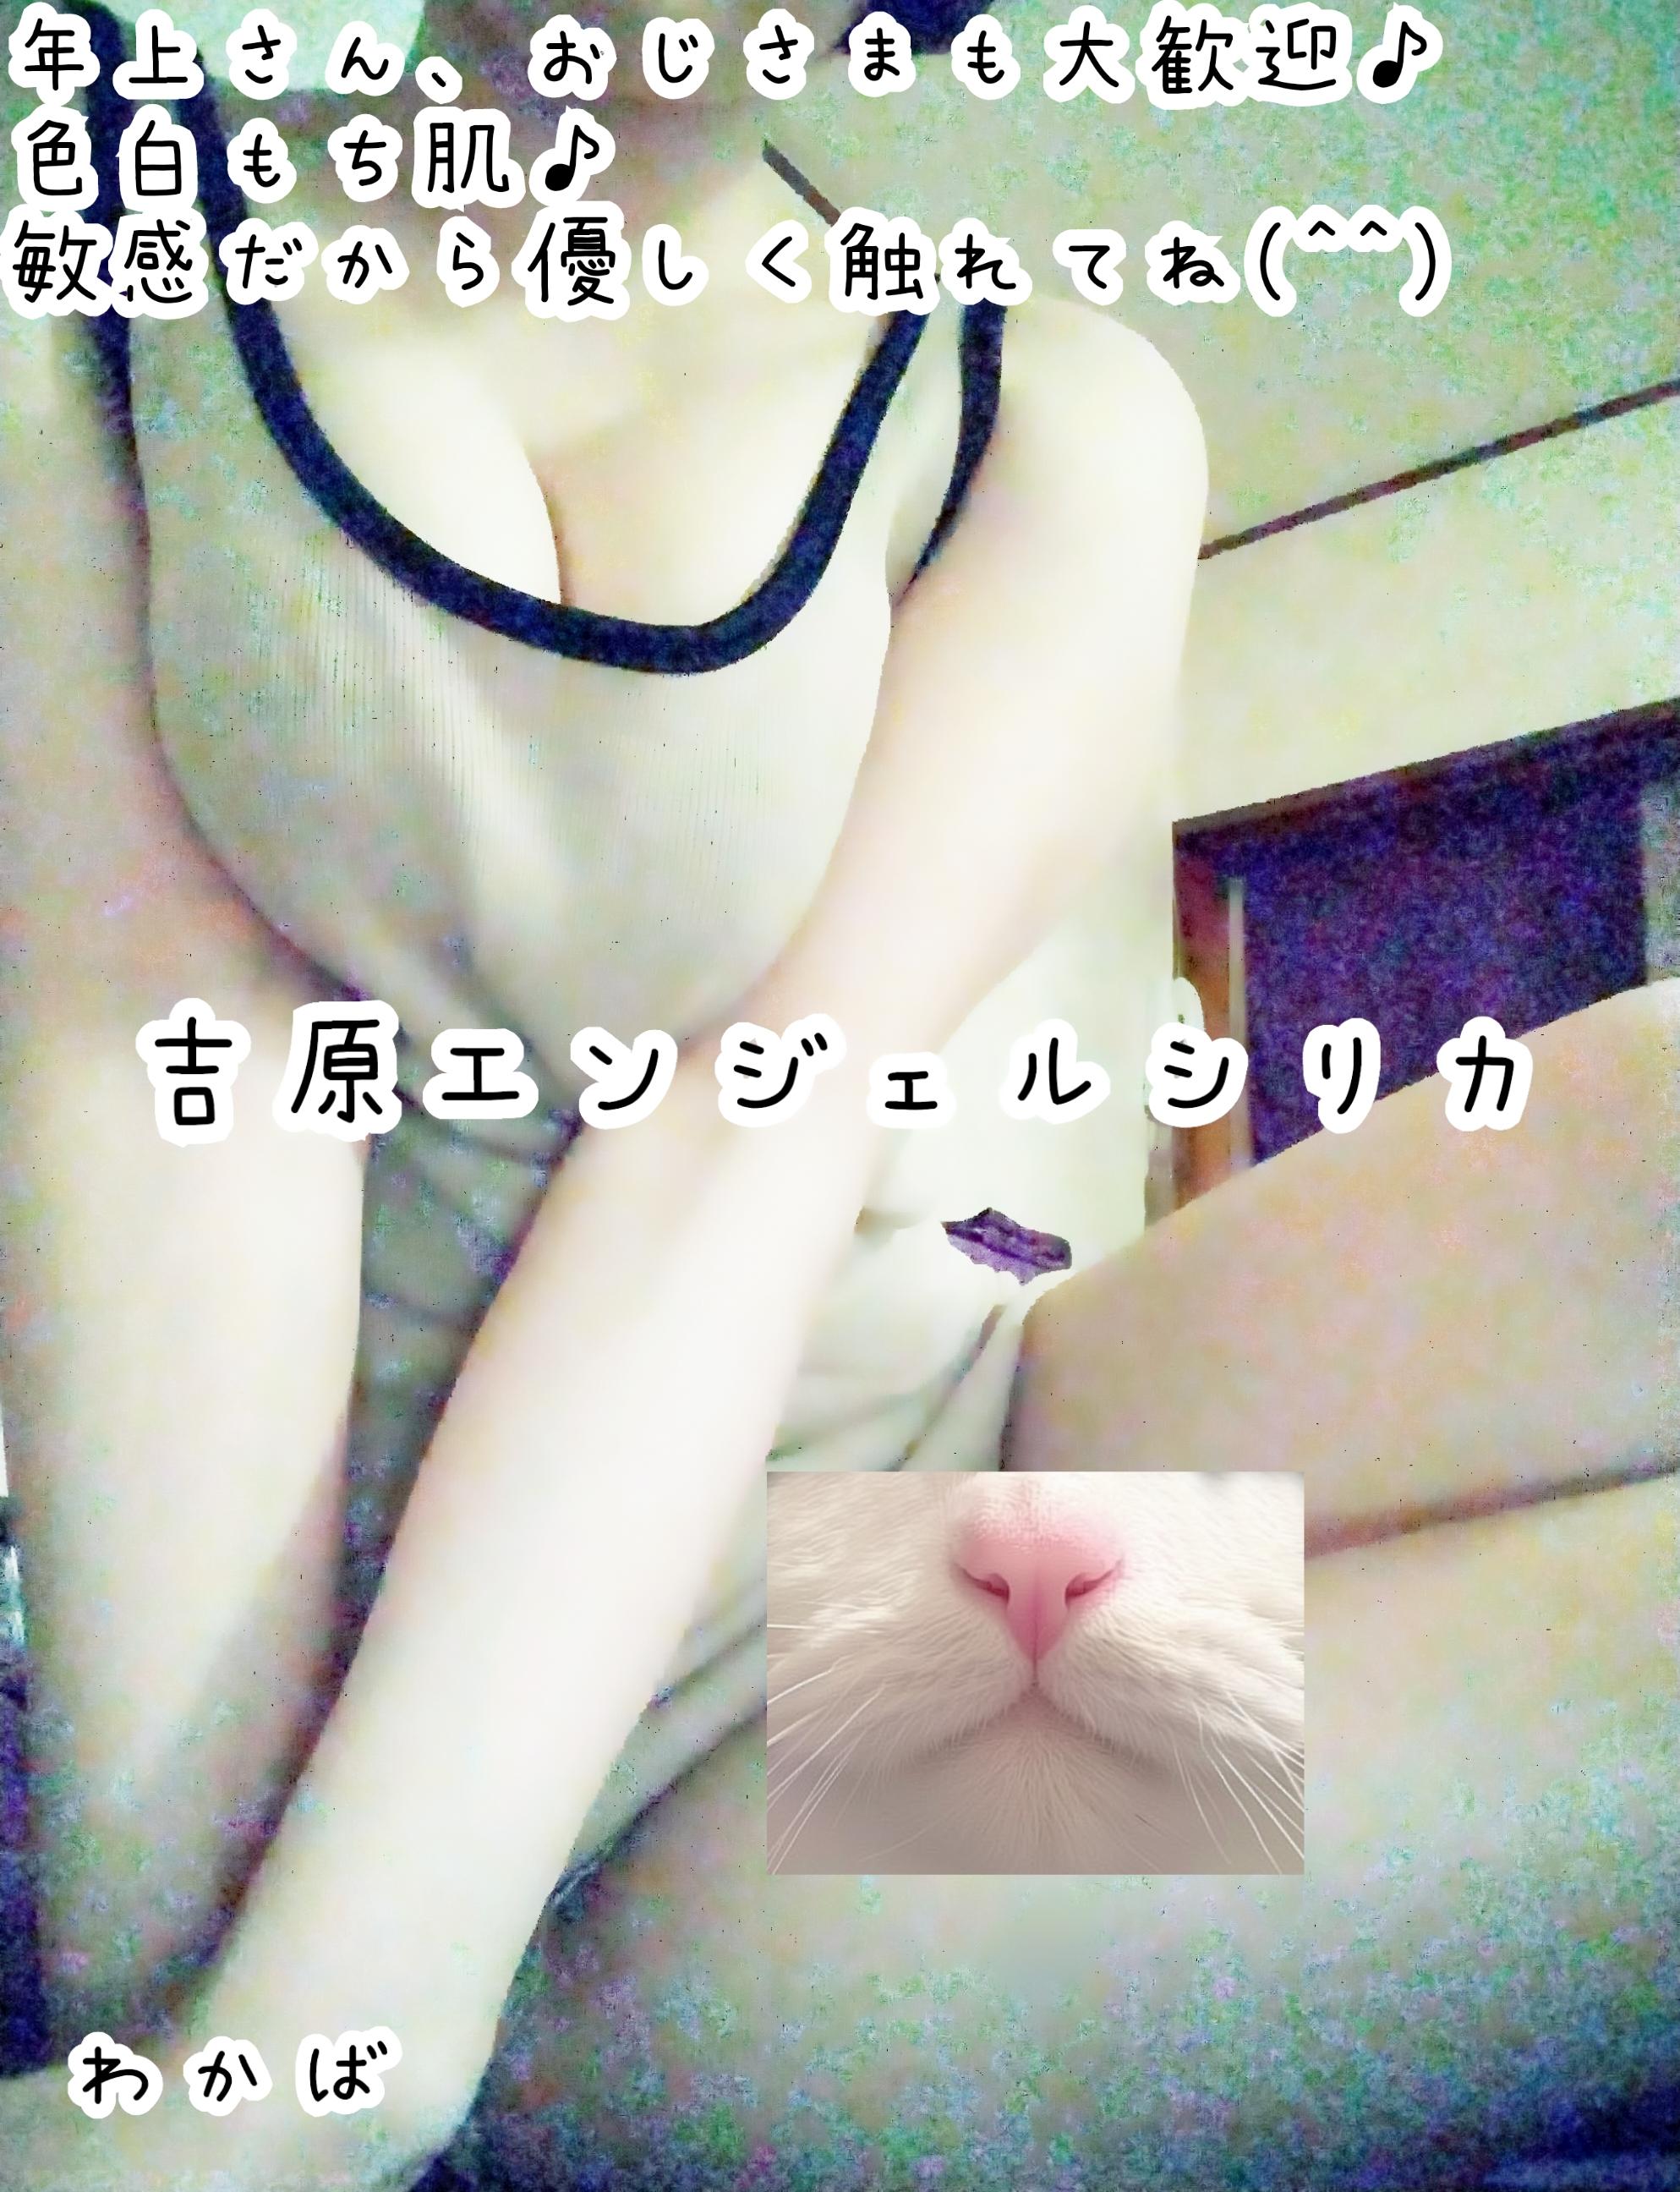 出(^^)<img class="emojione" alt="🐈" title=":cat2:" src="https://fuzoku.jp/assets/img/emojione/1f408.png"/>